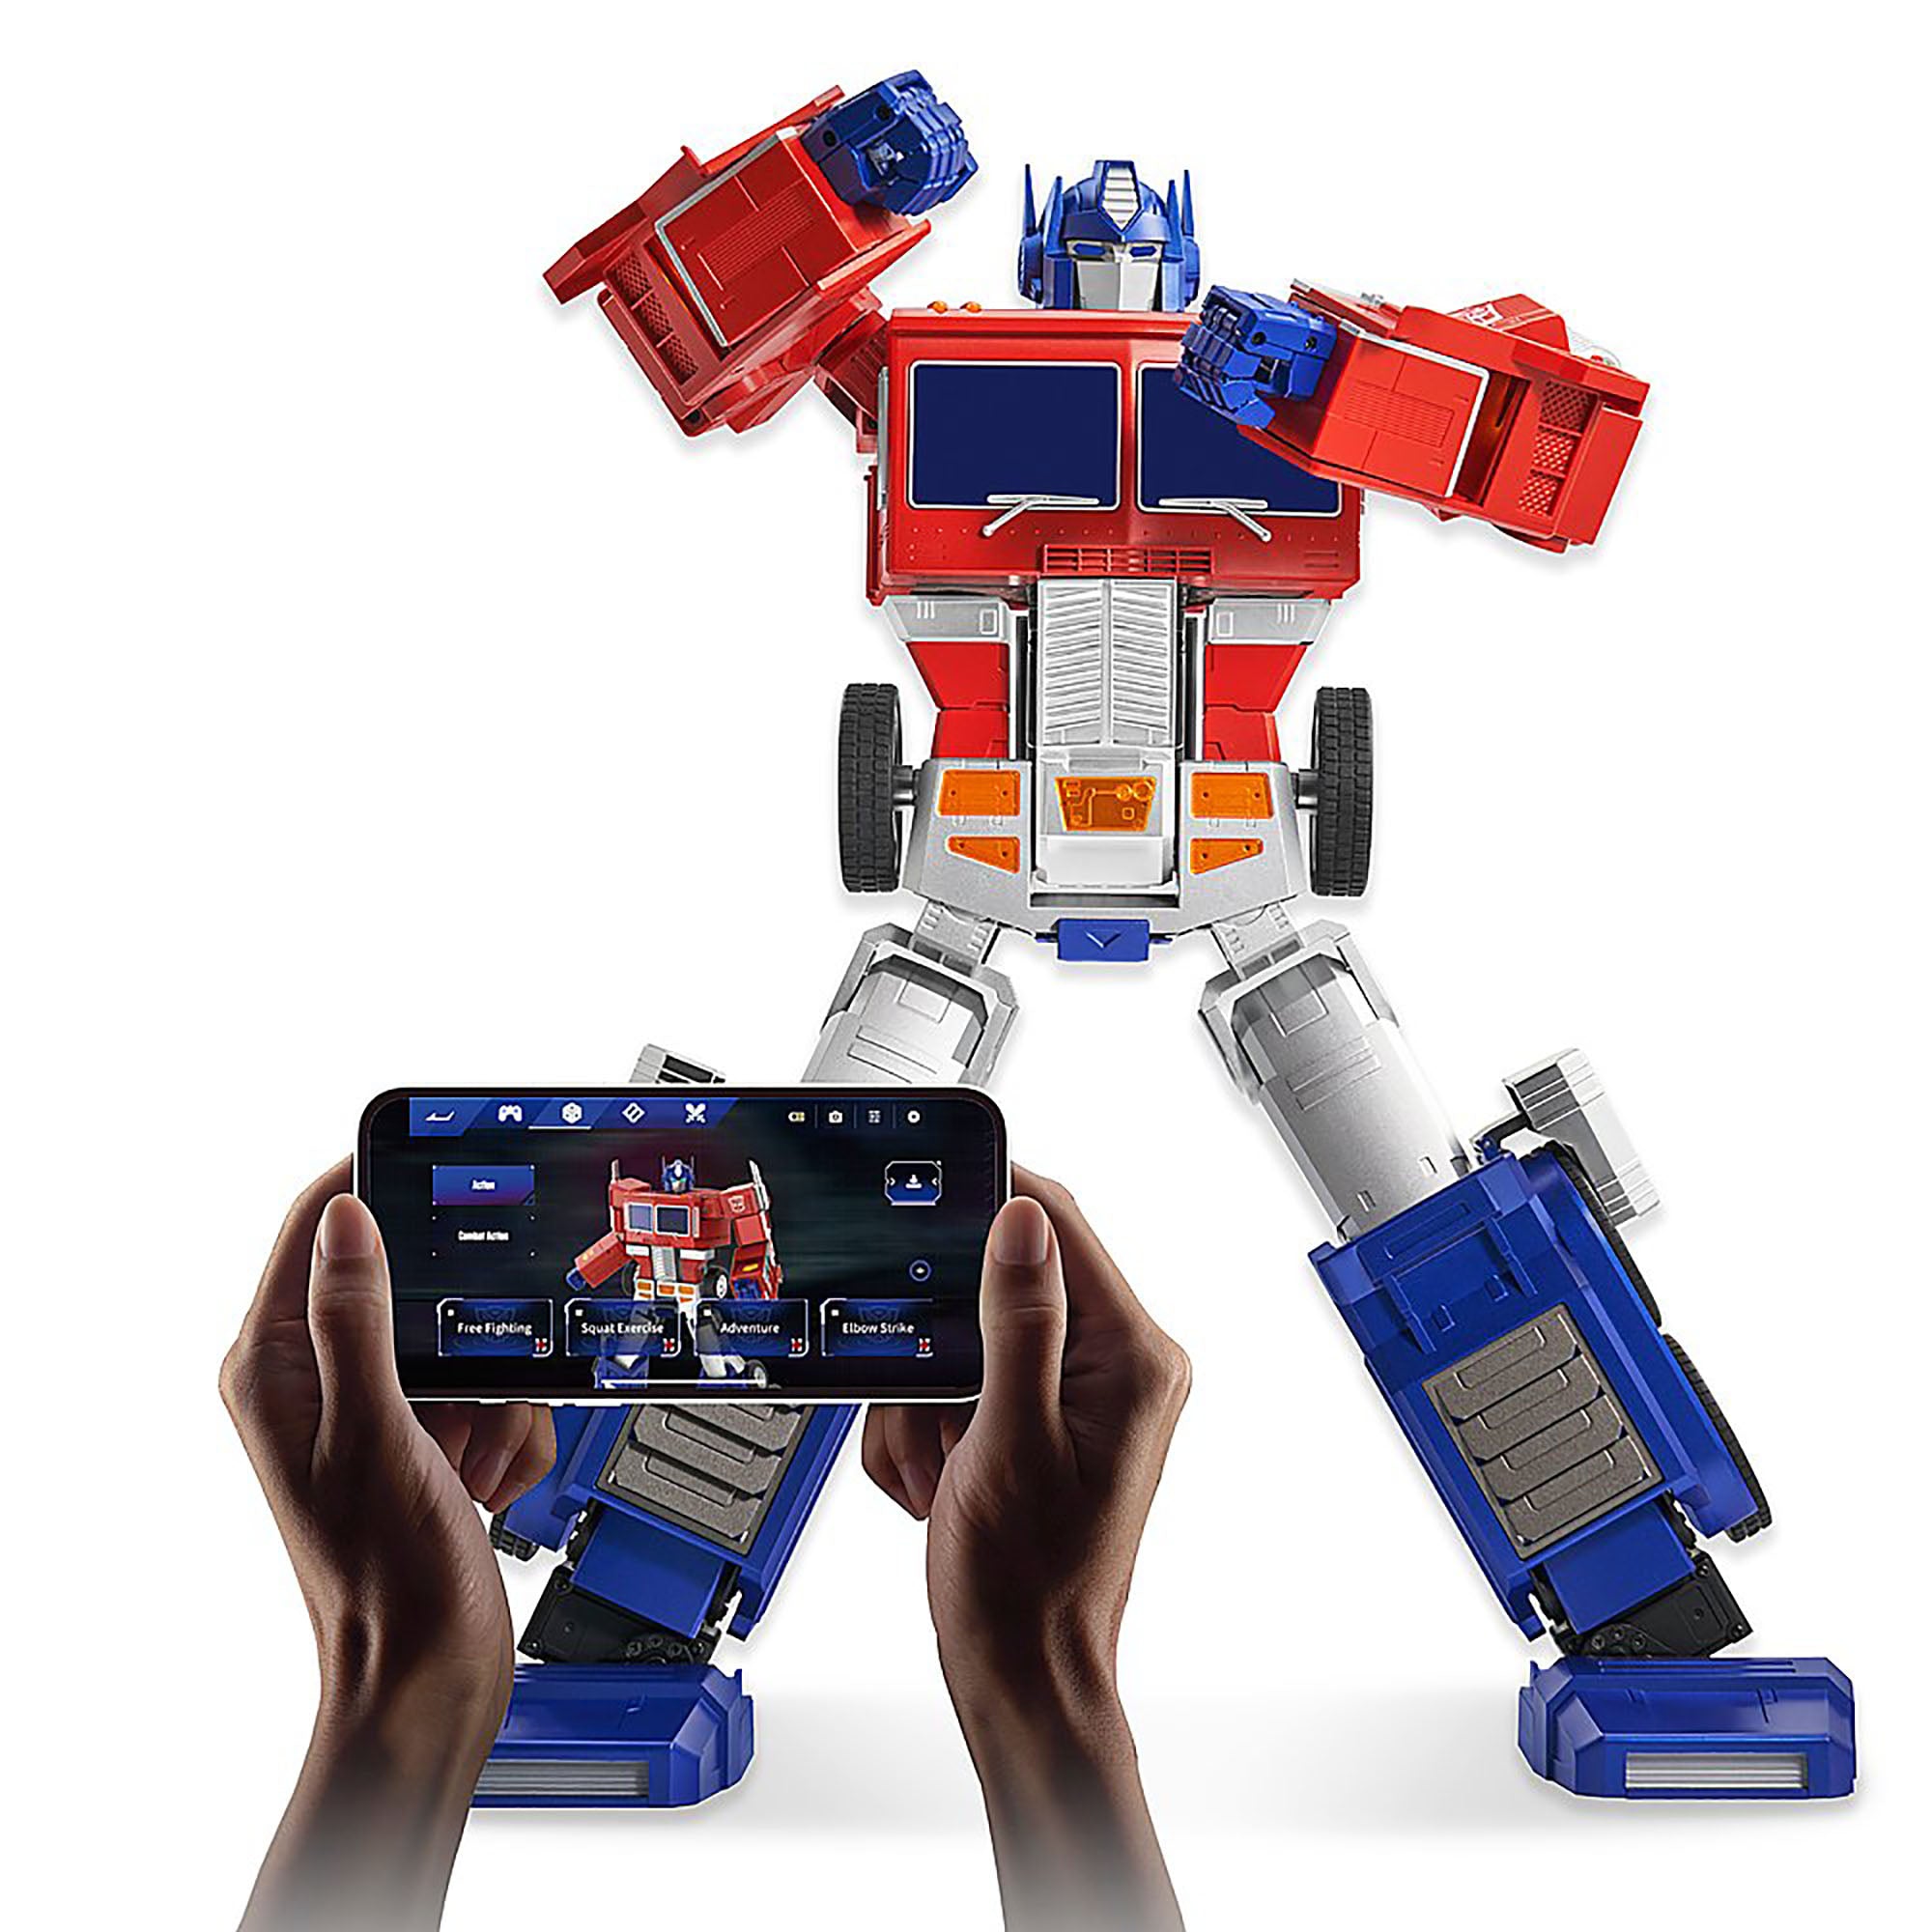 Transformers Optimus Prime Auto-Converting Robot (Elite) by